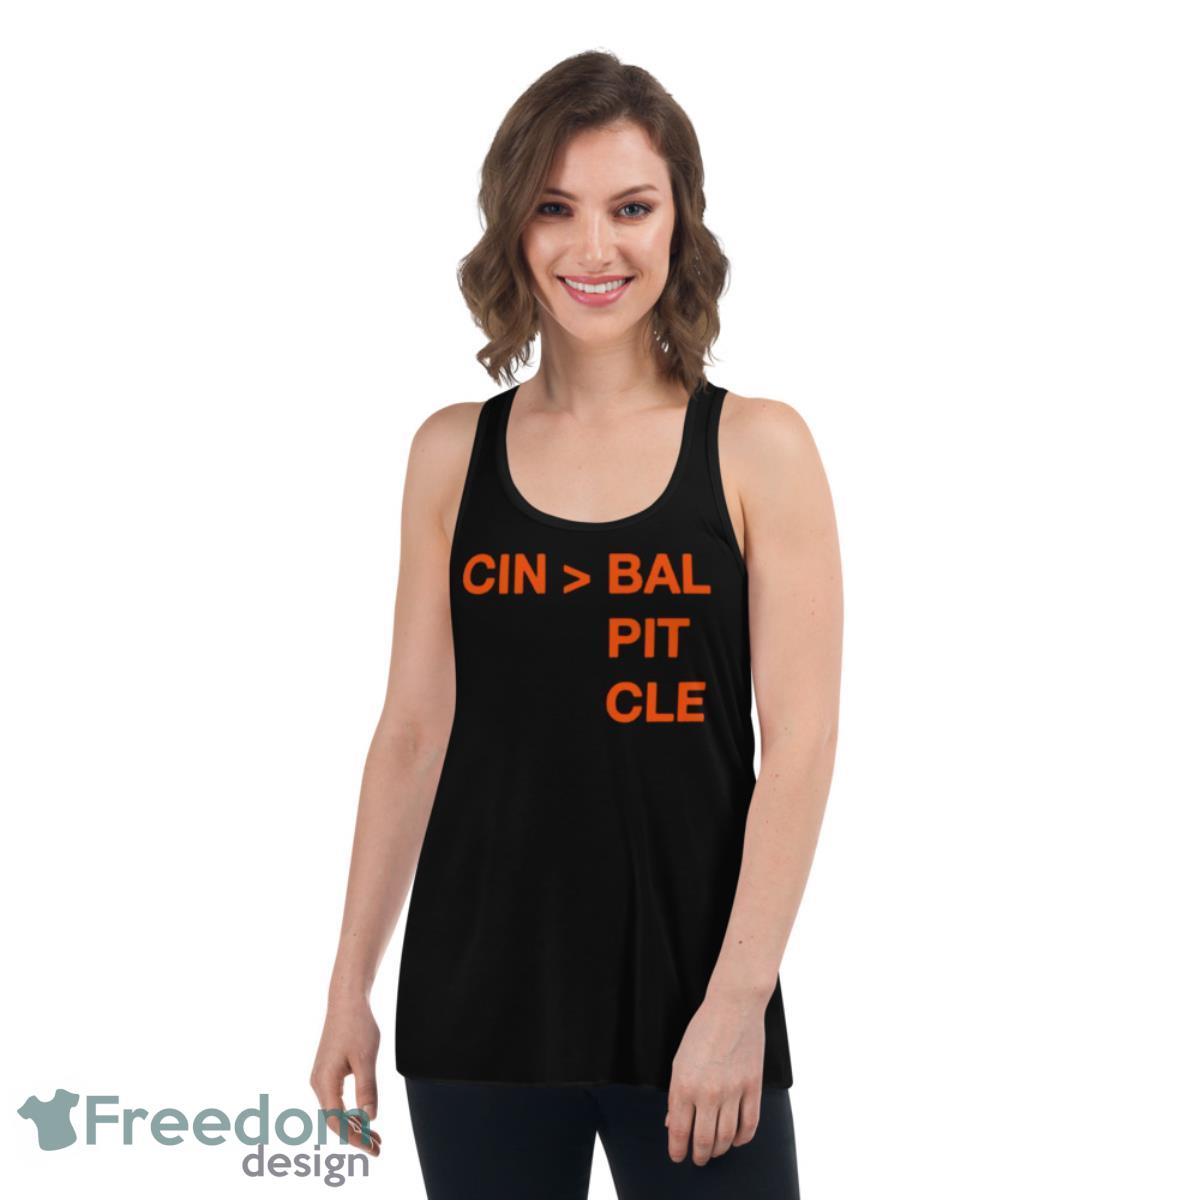 Cin more than Bal Pit Cle shirt